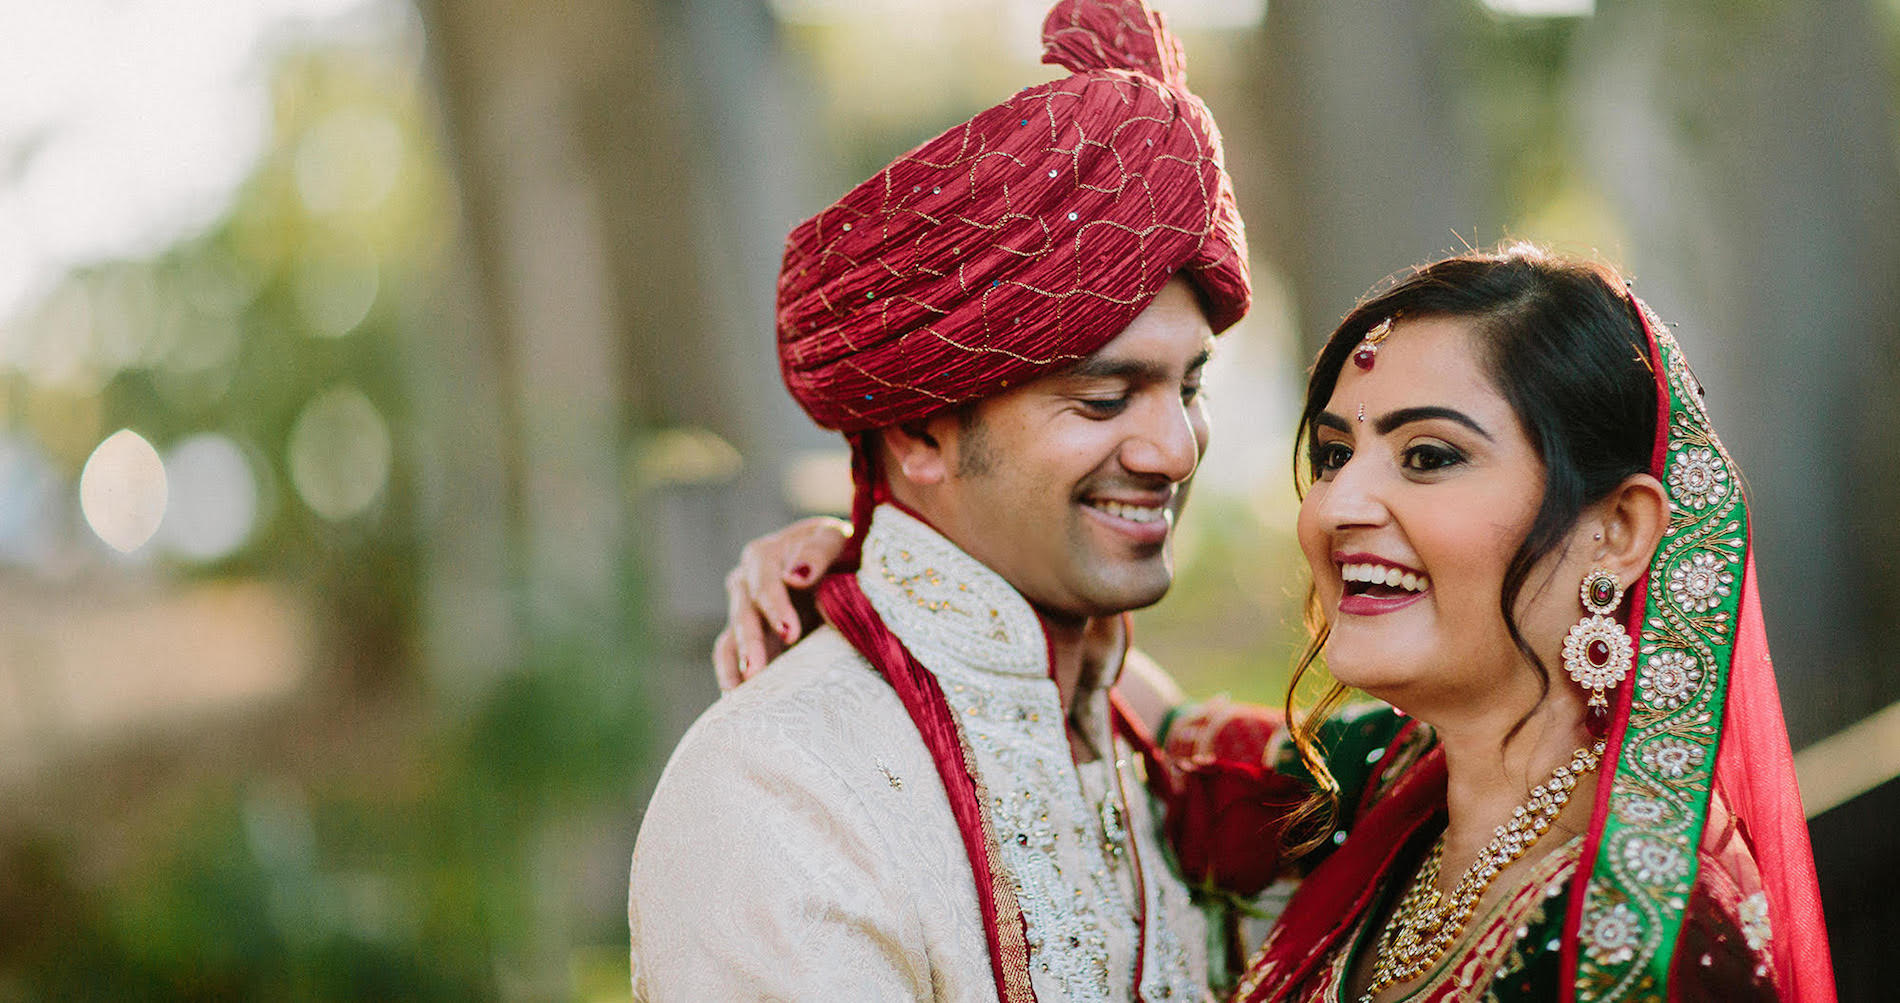 Bridal pose | Wedding dulhan pose, Indian wedding poses, Indian bride  photography poses